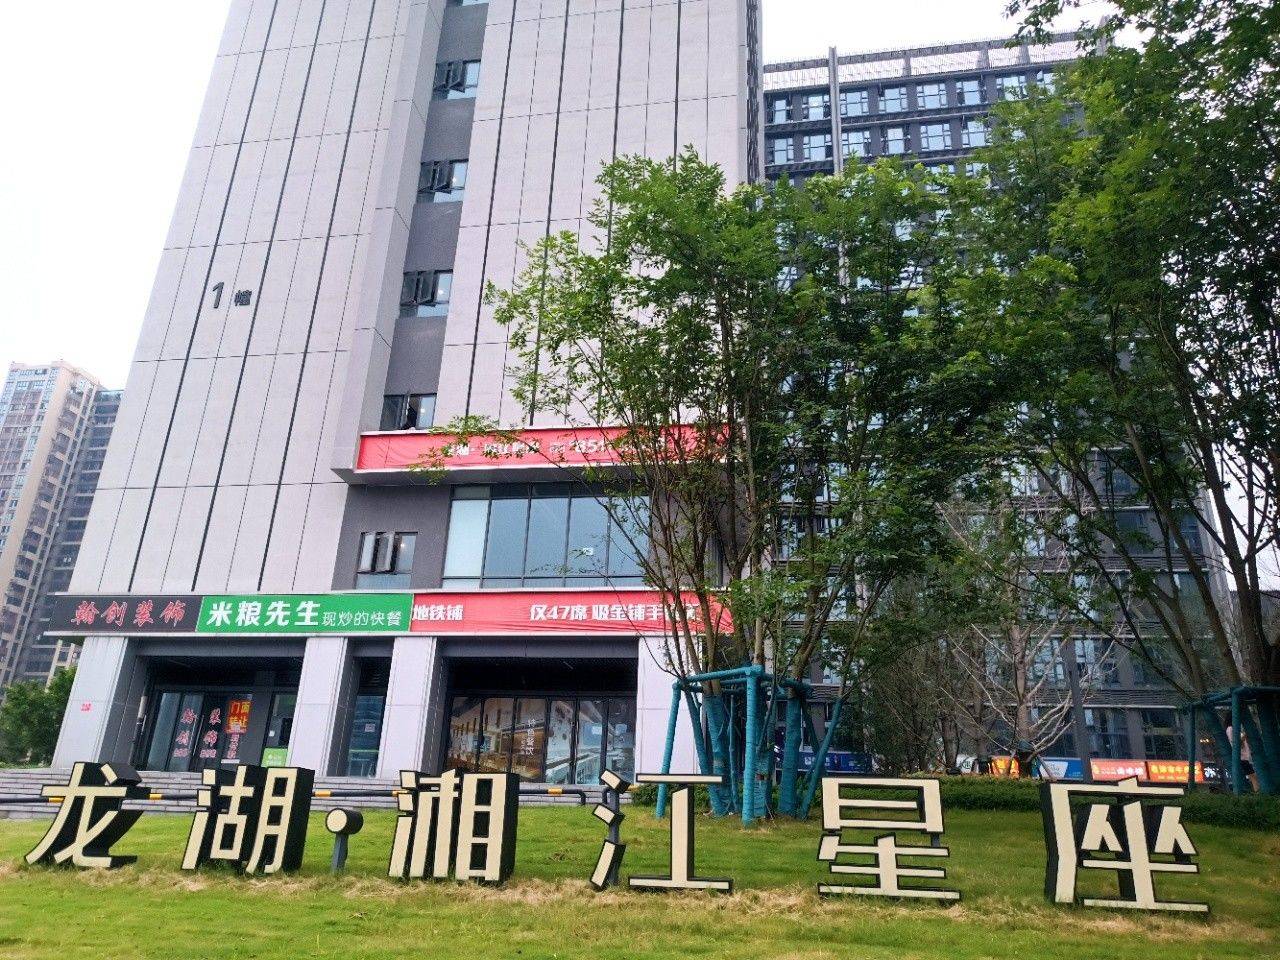 Changsha-Yuelu-Cozy Home,Clean&Comfy,No Gender Limit,Hustle & Bustle,“Friends”,Chilled,LGBTQ Friendly